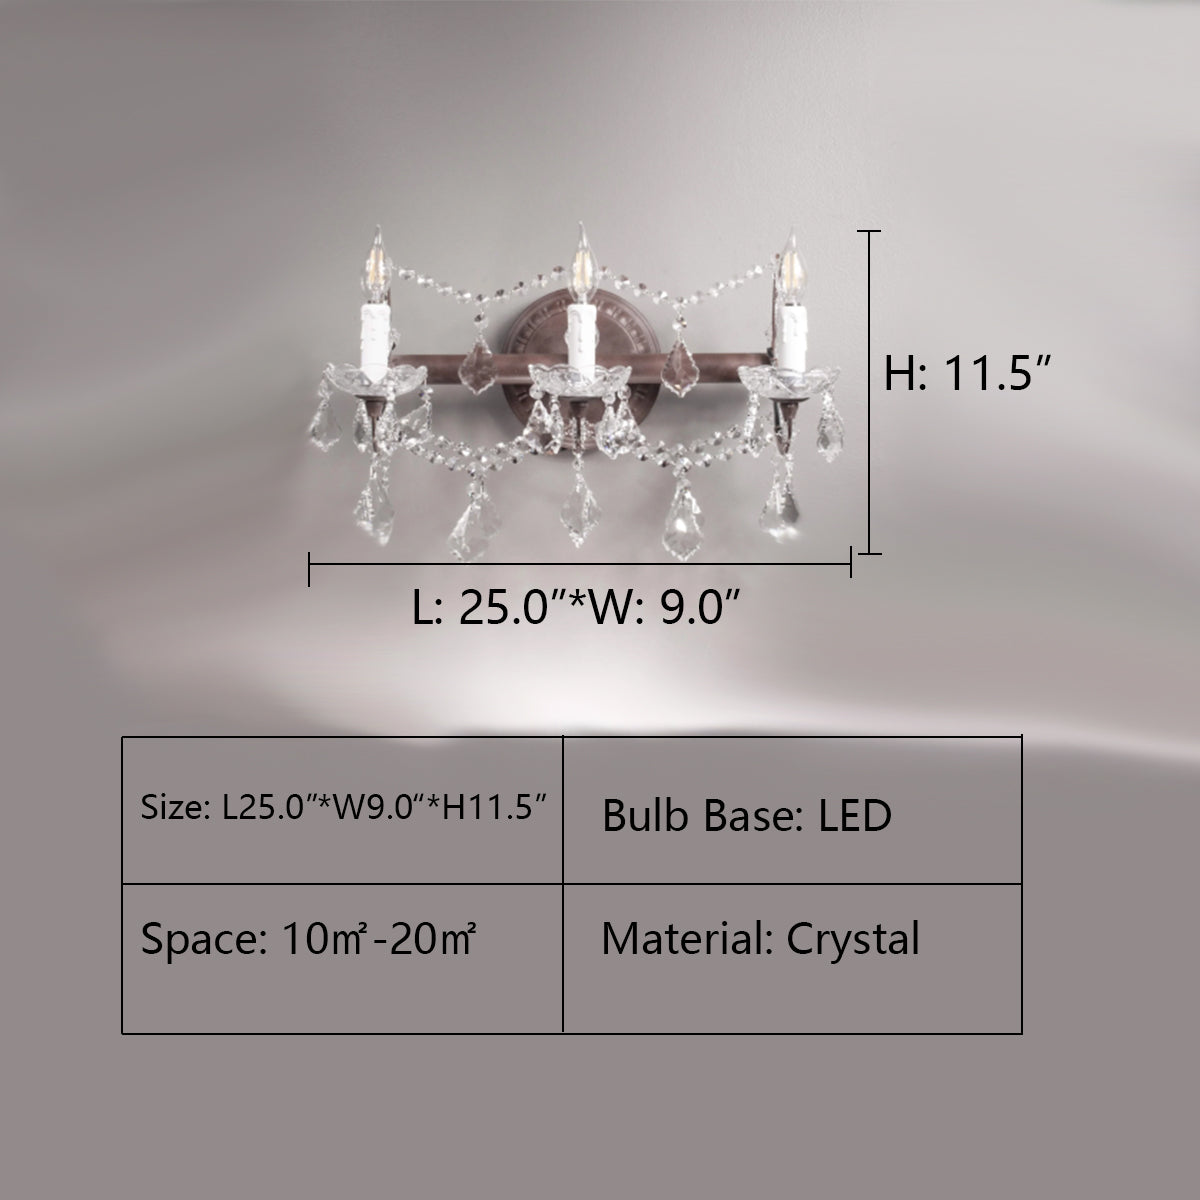 3Light: L25.0"*W9.0"*H11.5" wall light,wall source,candle,crystal pendant,rectangle,raindrop,teardrop,classical,pendant,light,lamp